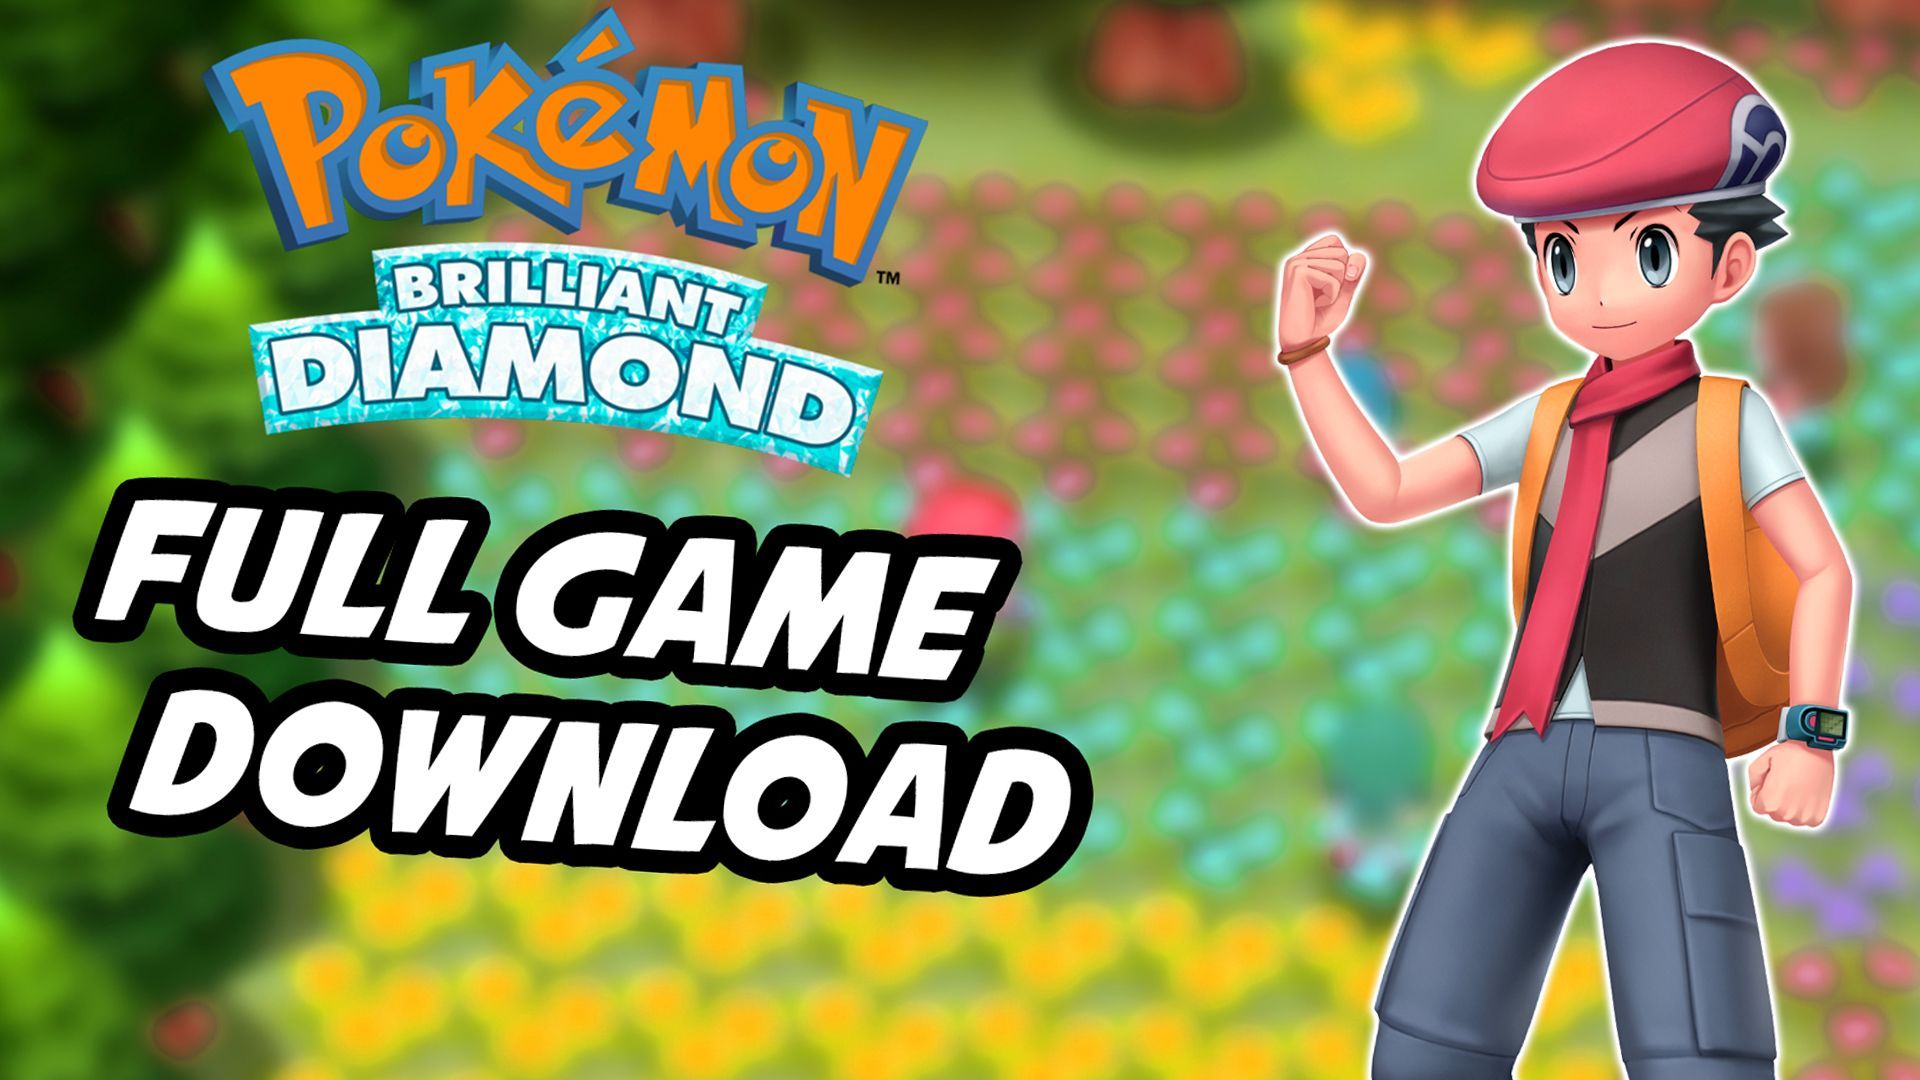 Download v1.3.0 Pokémon Brilliant Diamond & Shining Pearl on Ryujinx PC  (XCI) 